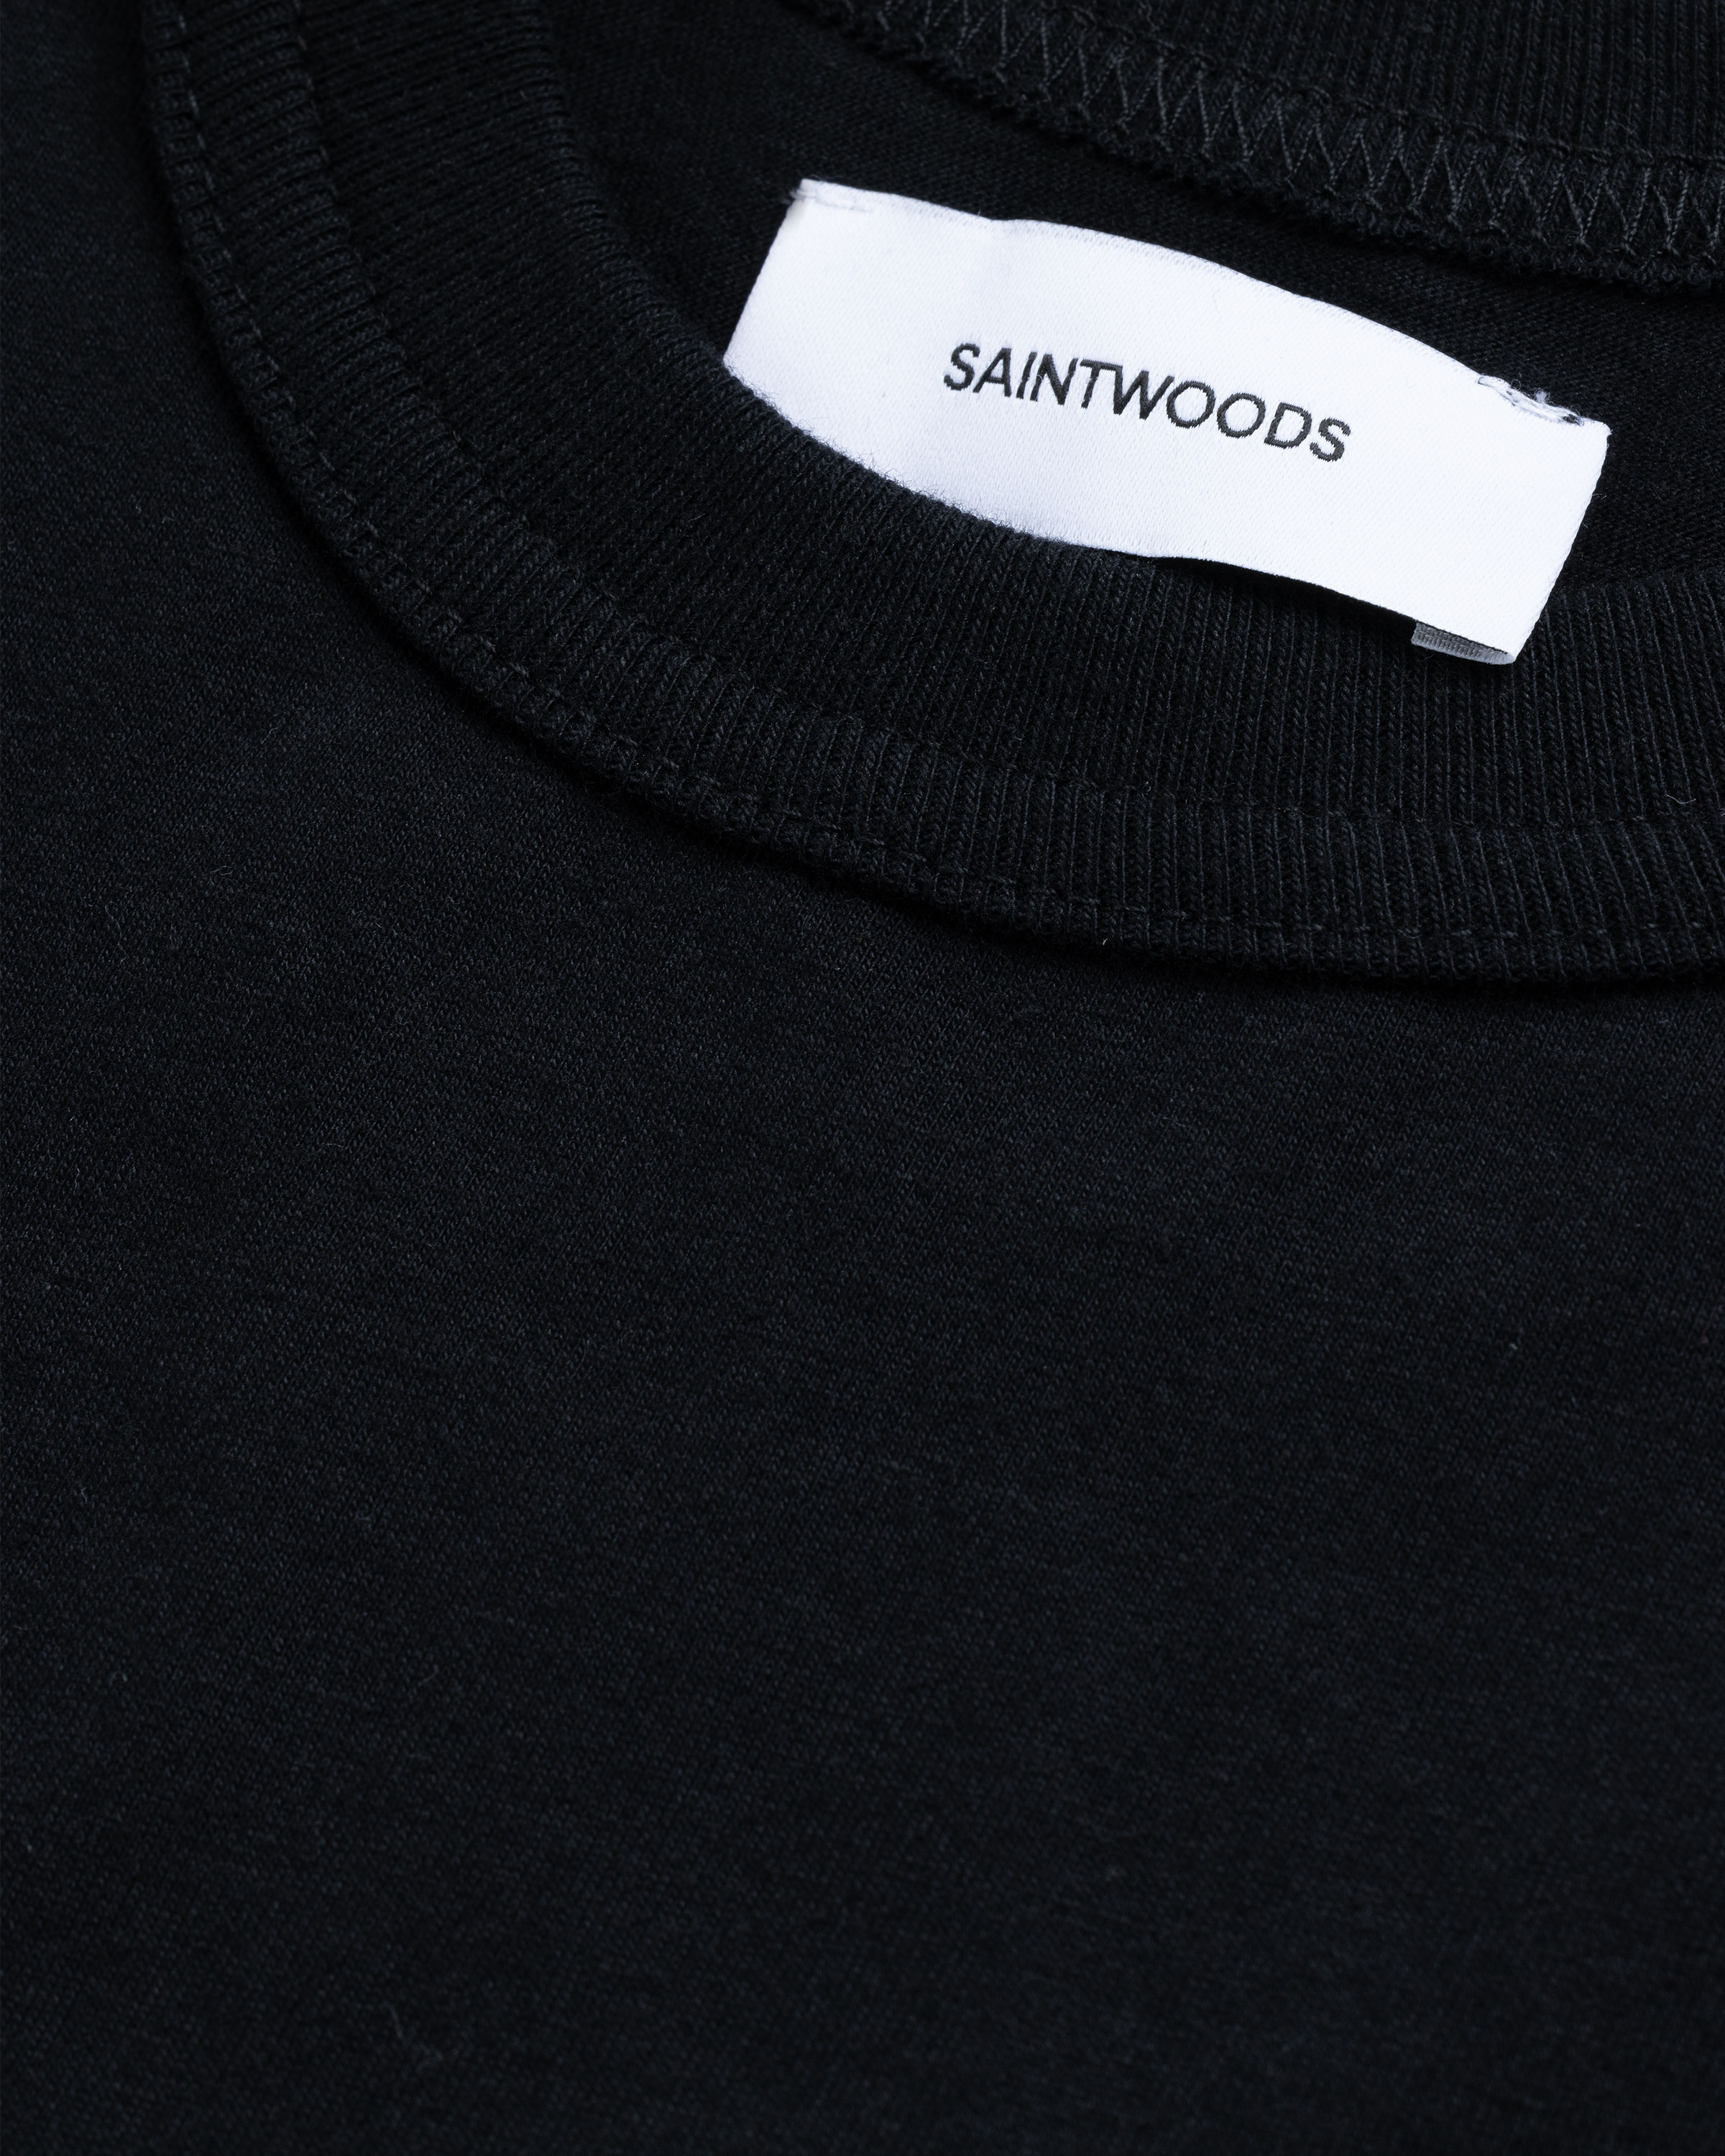 Saintwoods - Yellow Snow Tee Black - Clothing - Black - Image 6